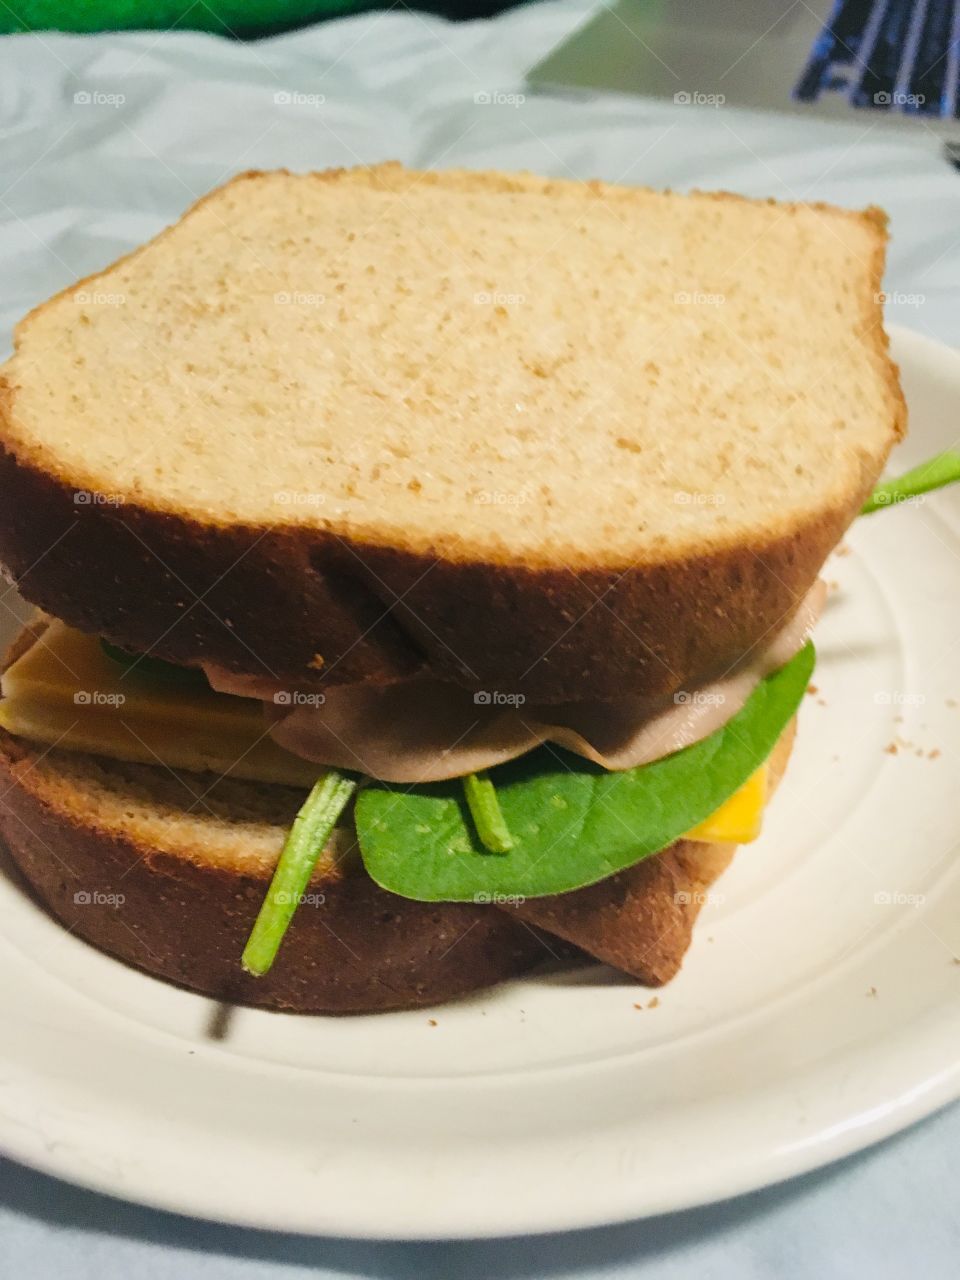 A healthy sandwich I made